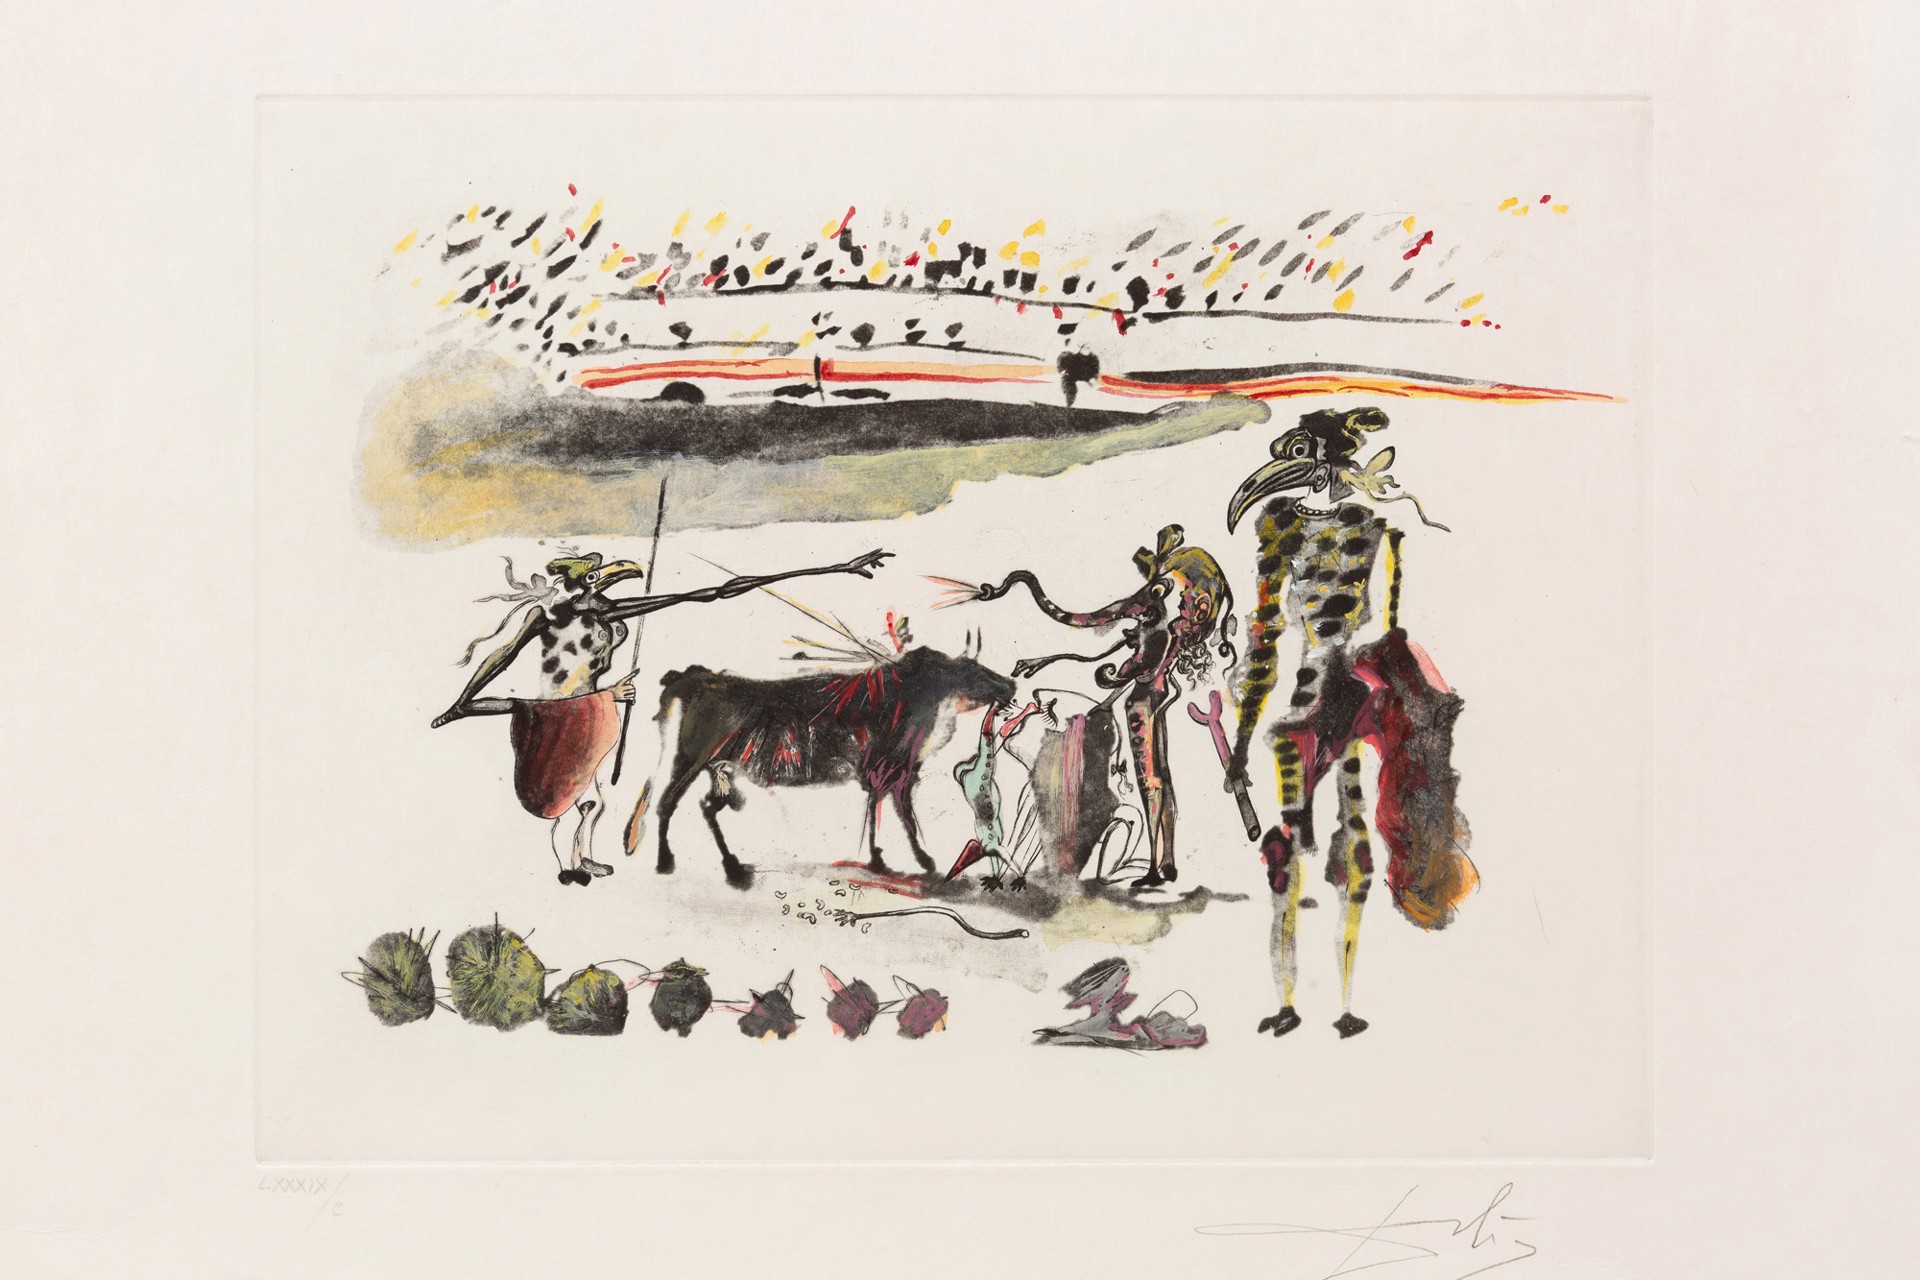 Surrealist Bullfight "Bullfight with Parrots" by Salvador Dalí